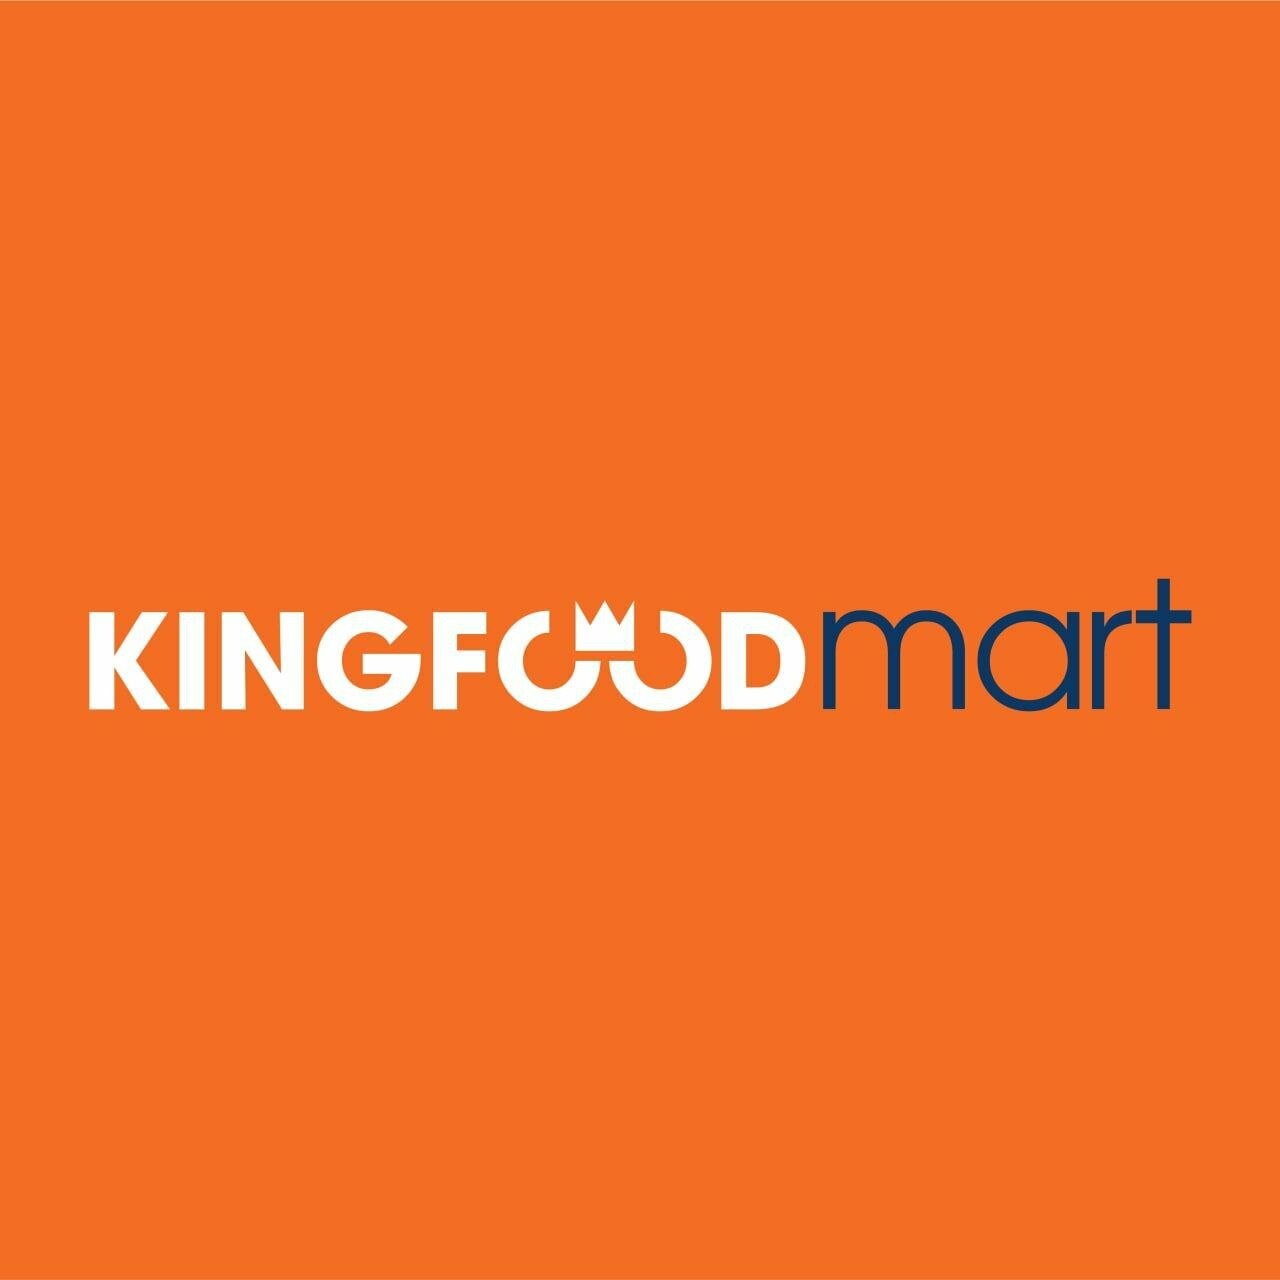 Công Ty Kingfoodmart